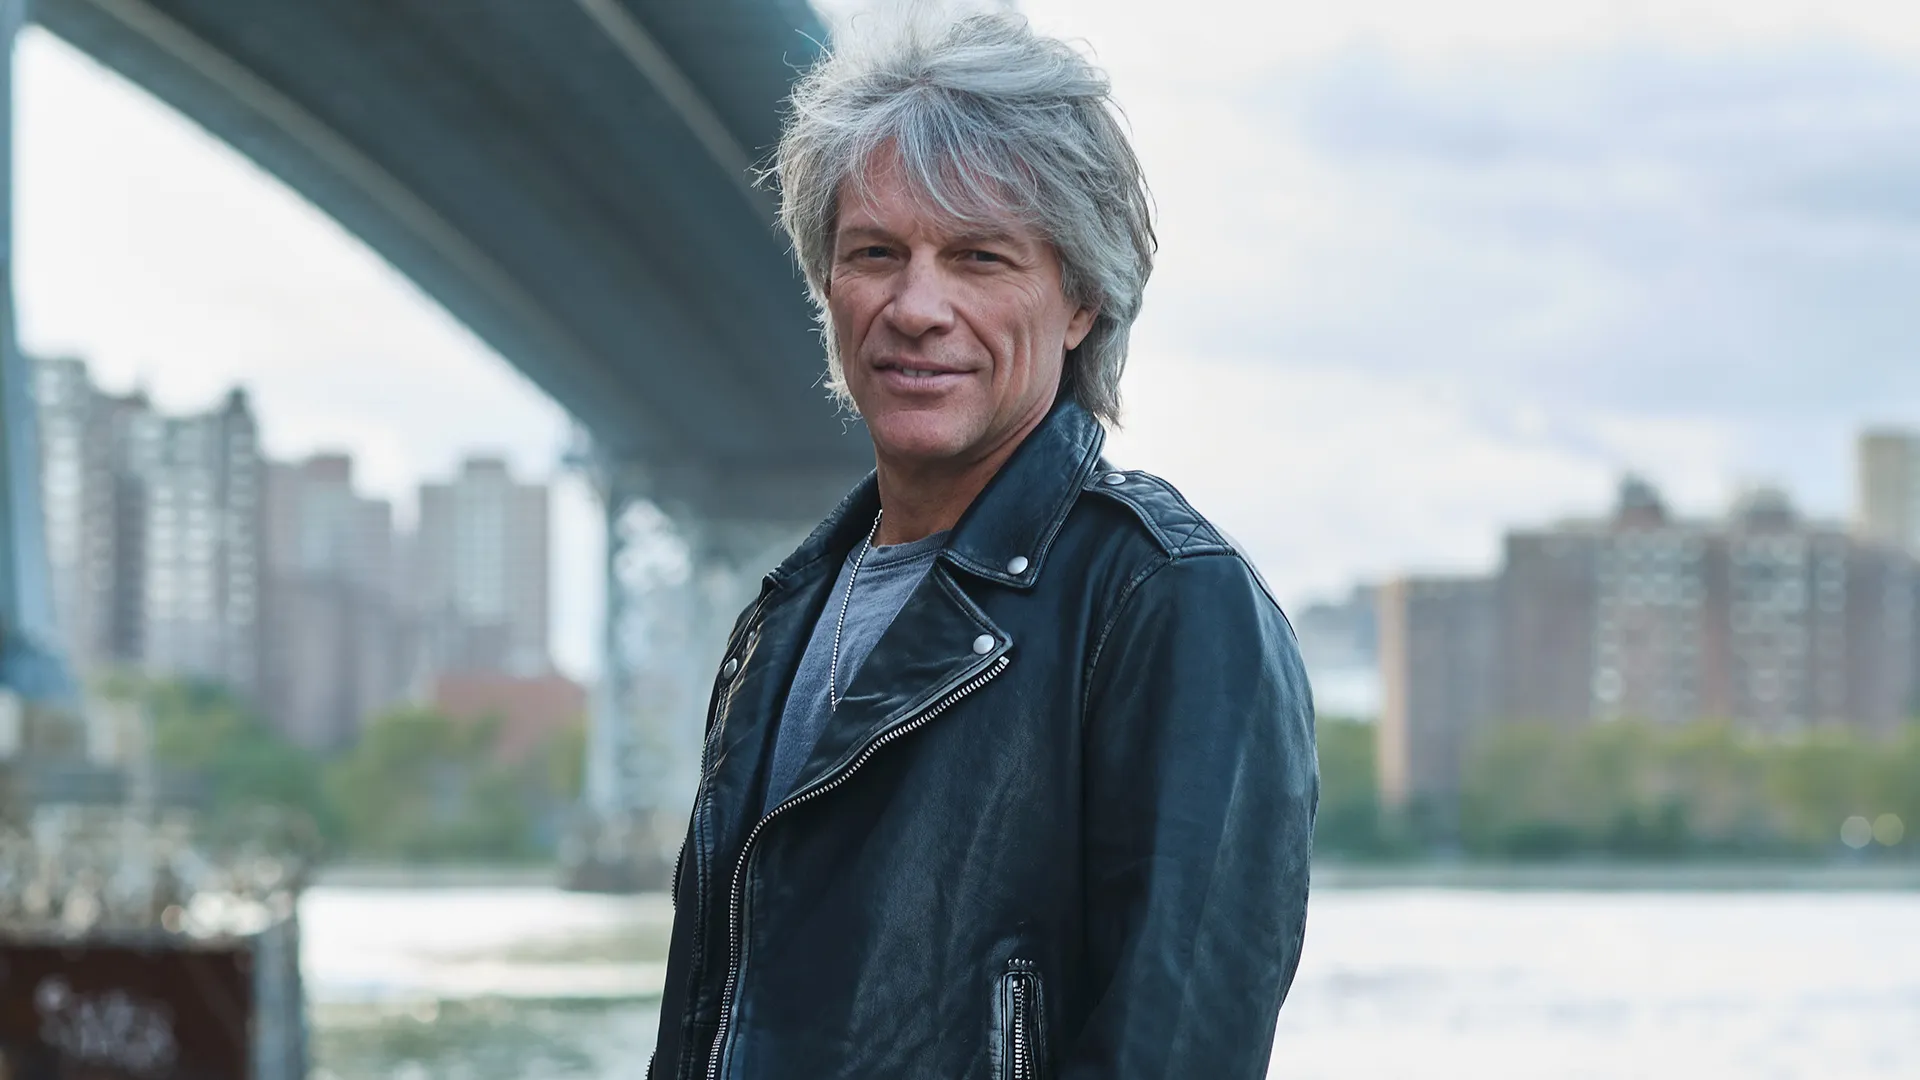 Jon Bon Jovi Biography Age, Height, Birthday, Family, Net Worth